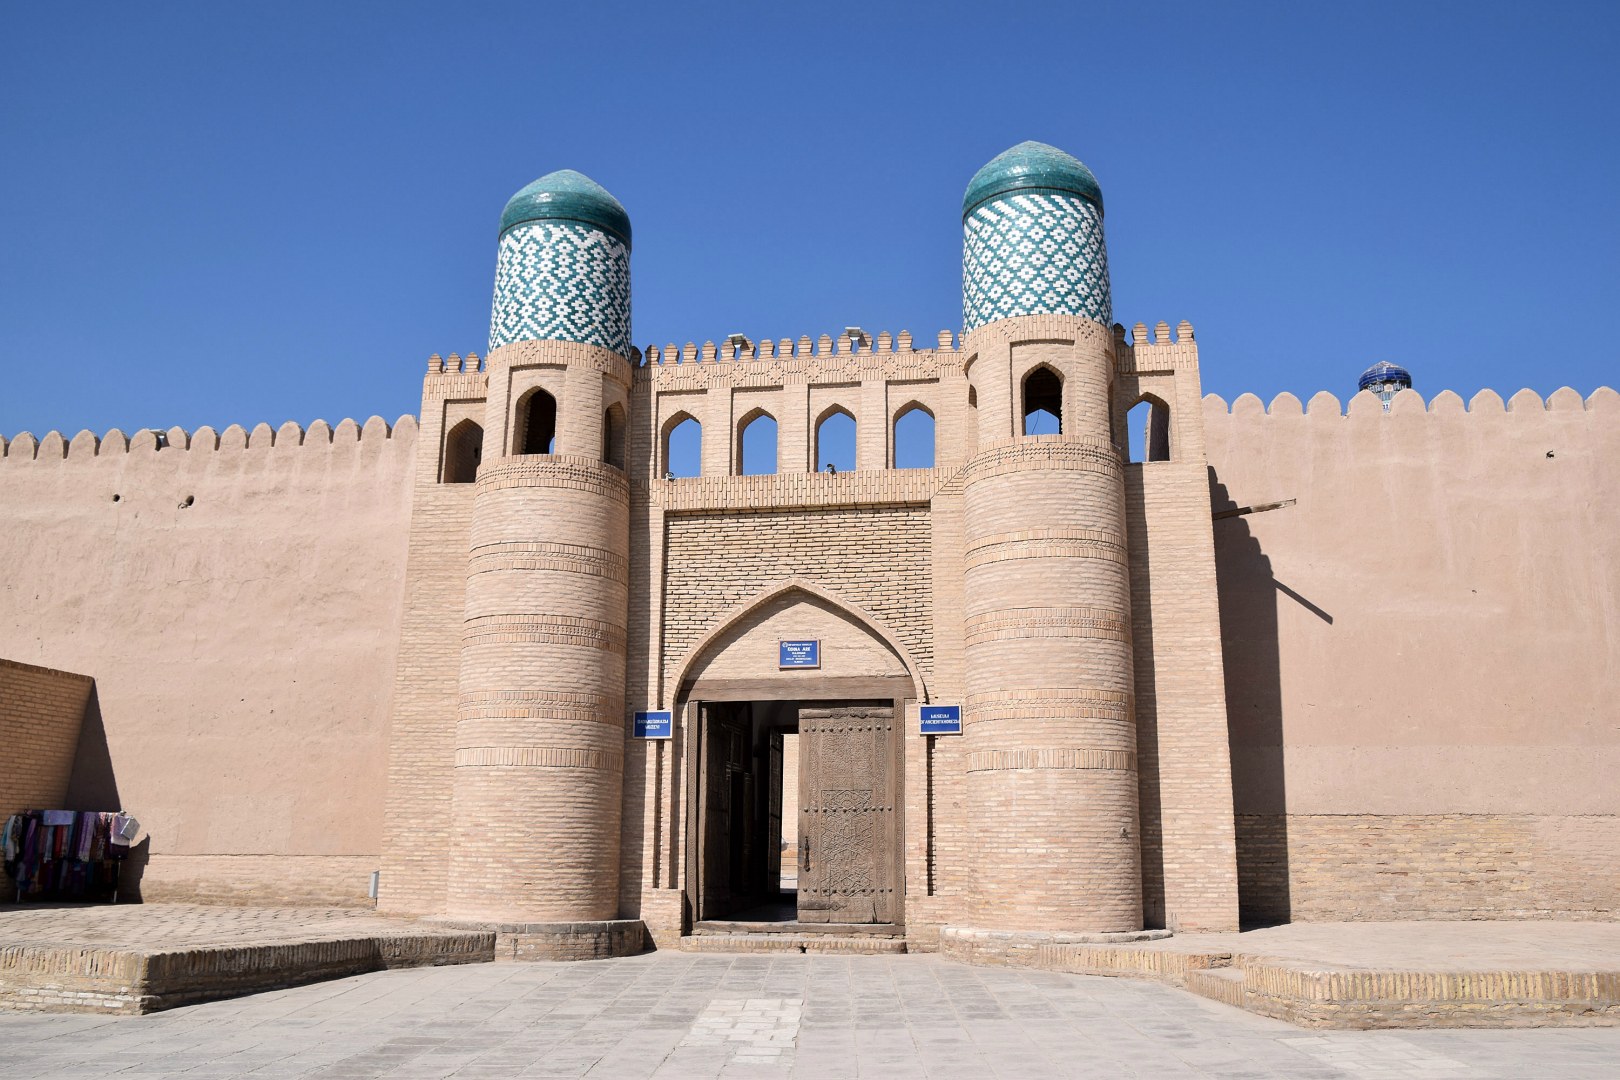 Entrance to Kunya Ark, Khiva